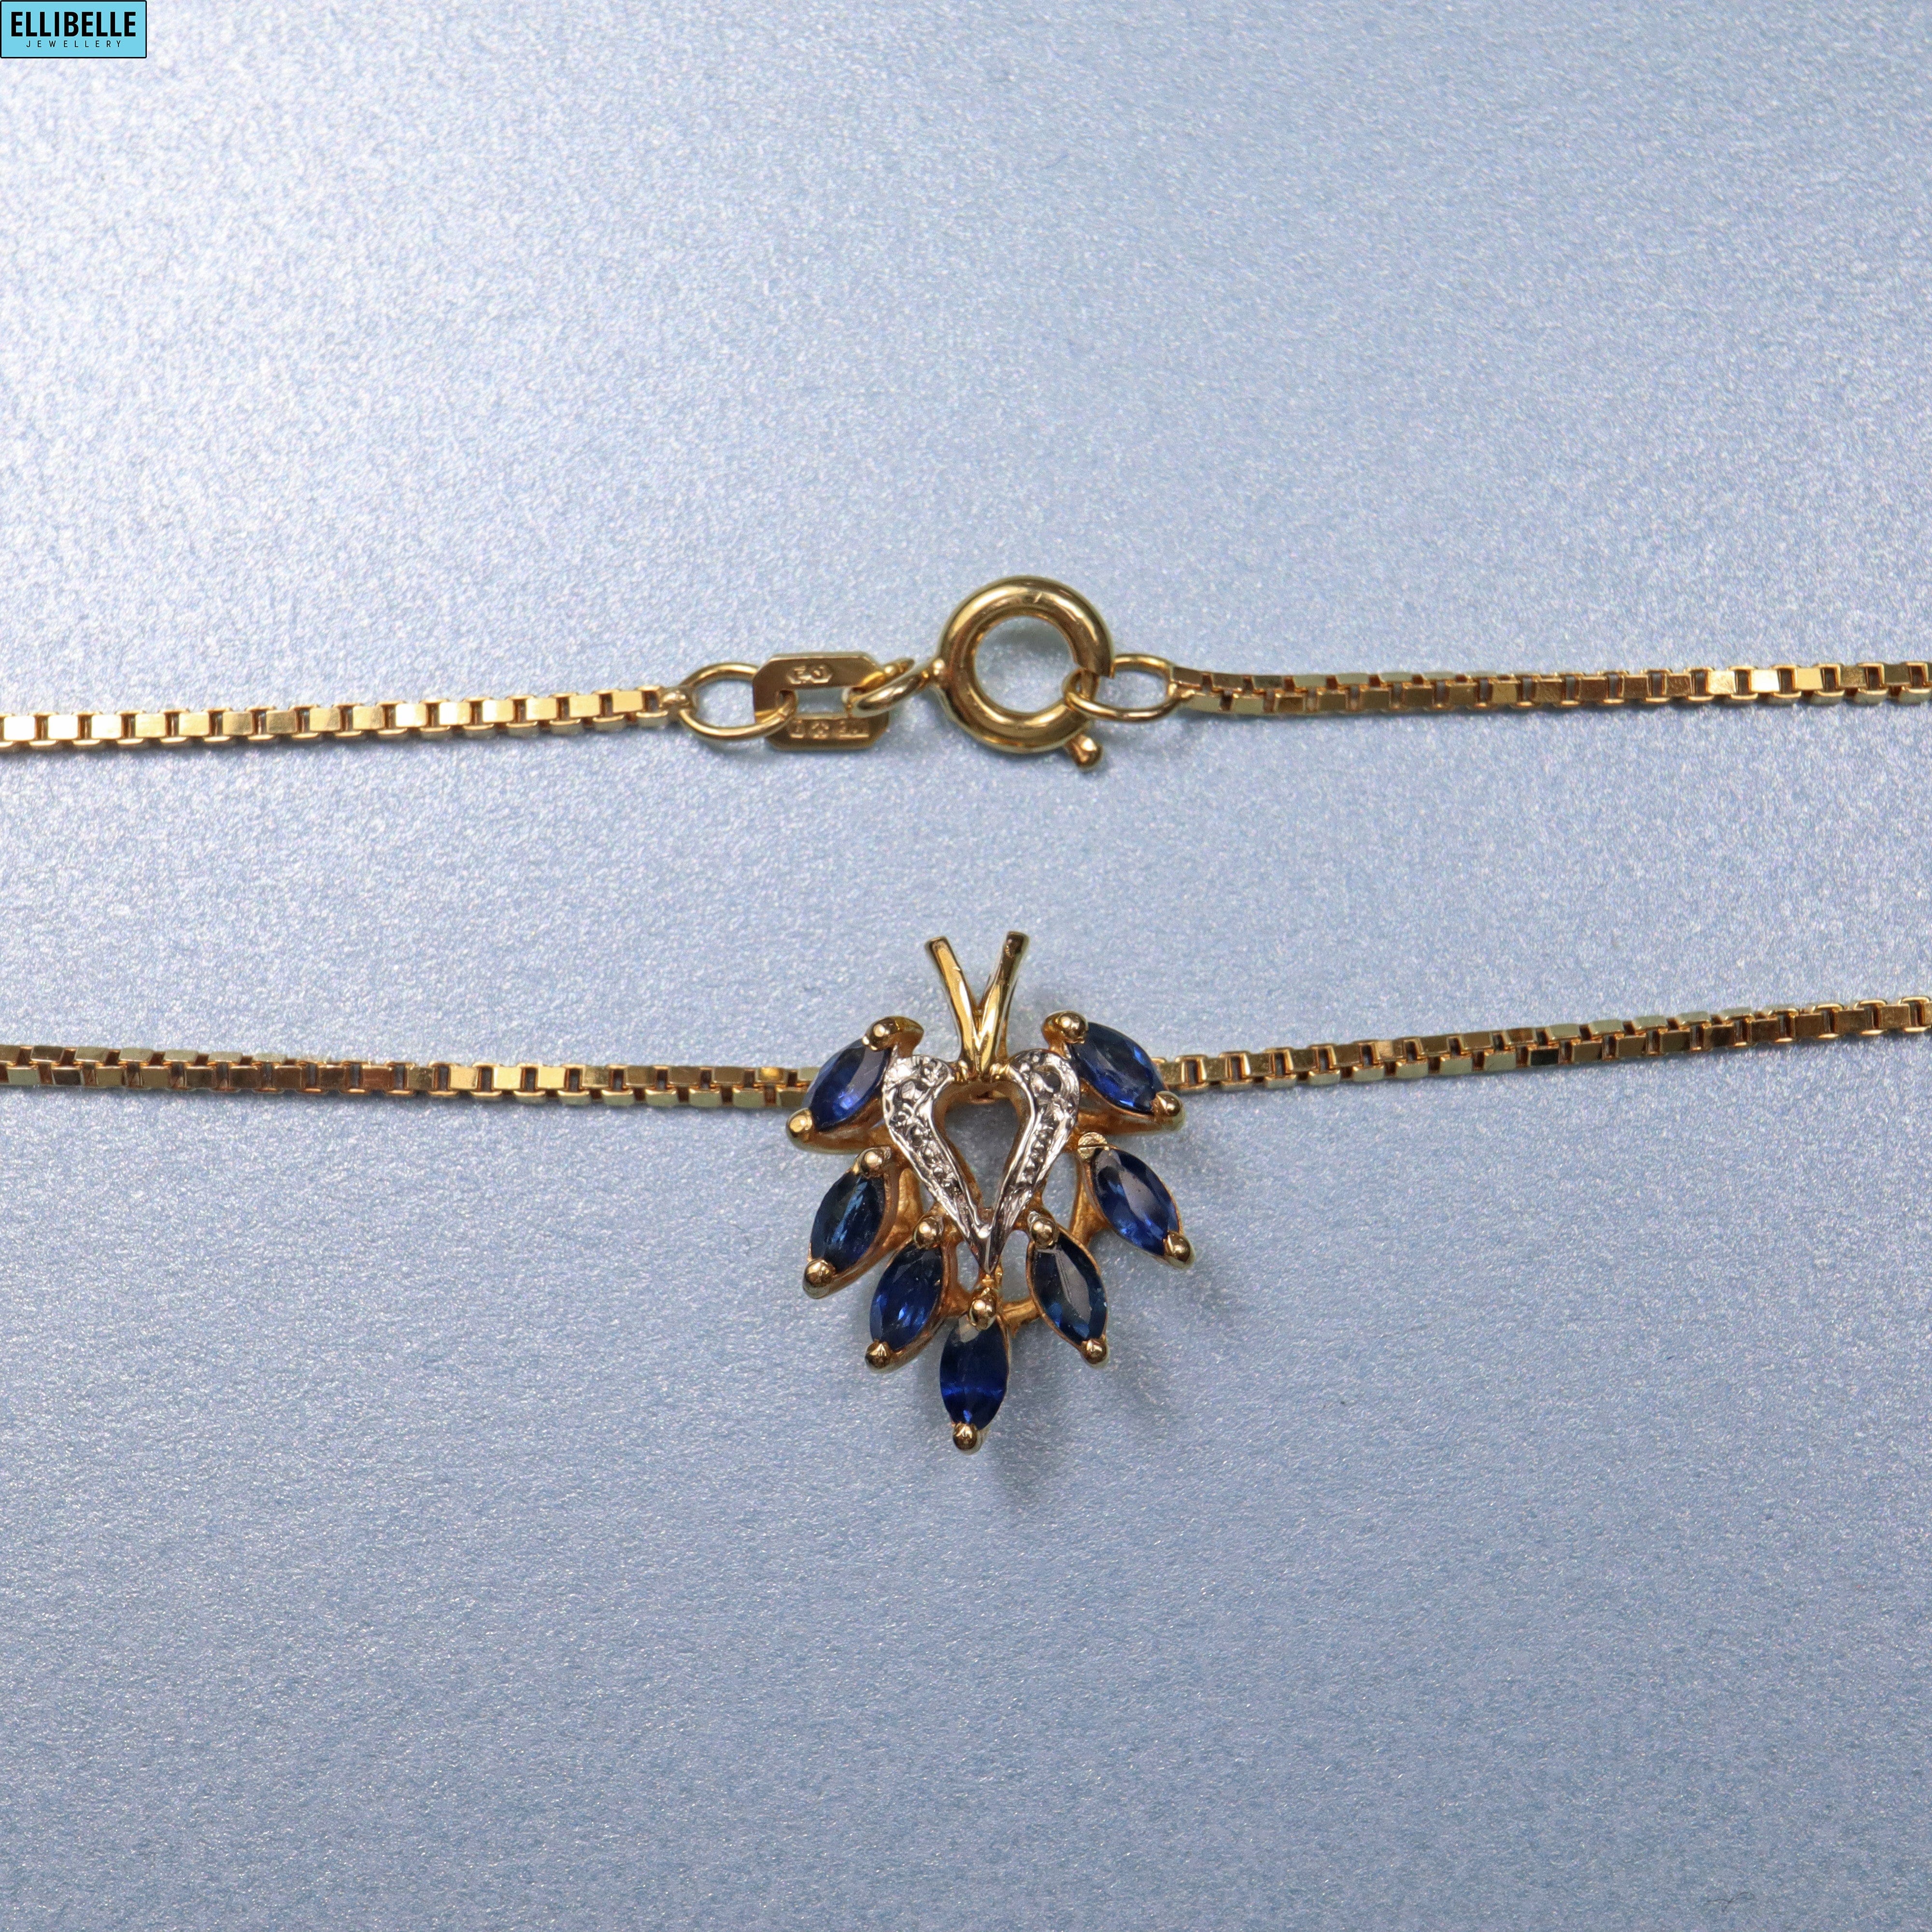 Ellibelle Jewellery VINTAGE MARQUISE SAPPHIRE 9CT GOLD PENDANT NECKLACE